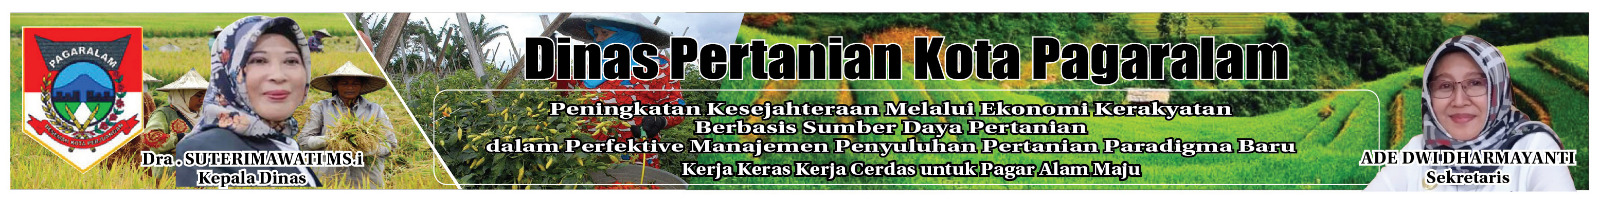 Banner Pertanian